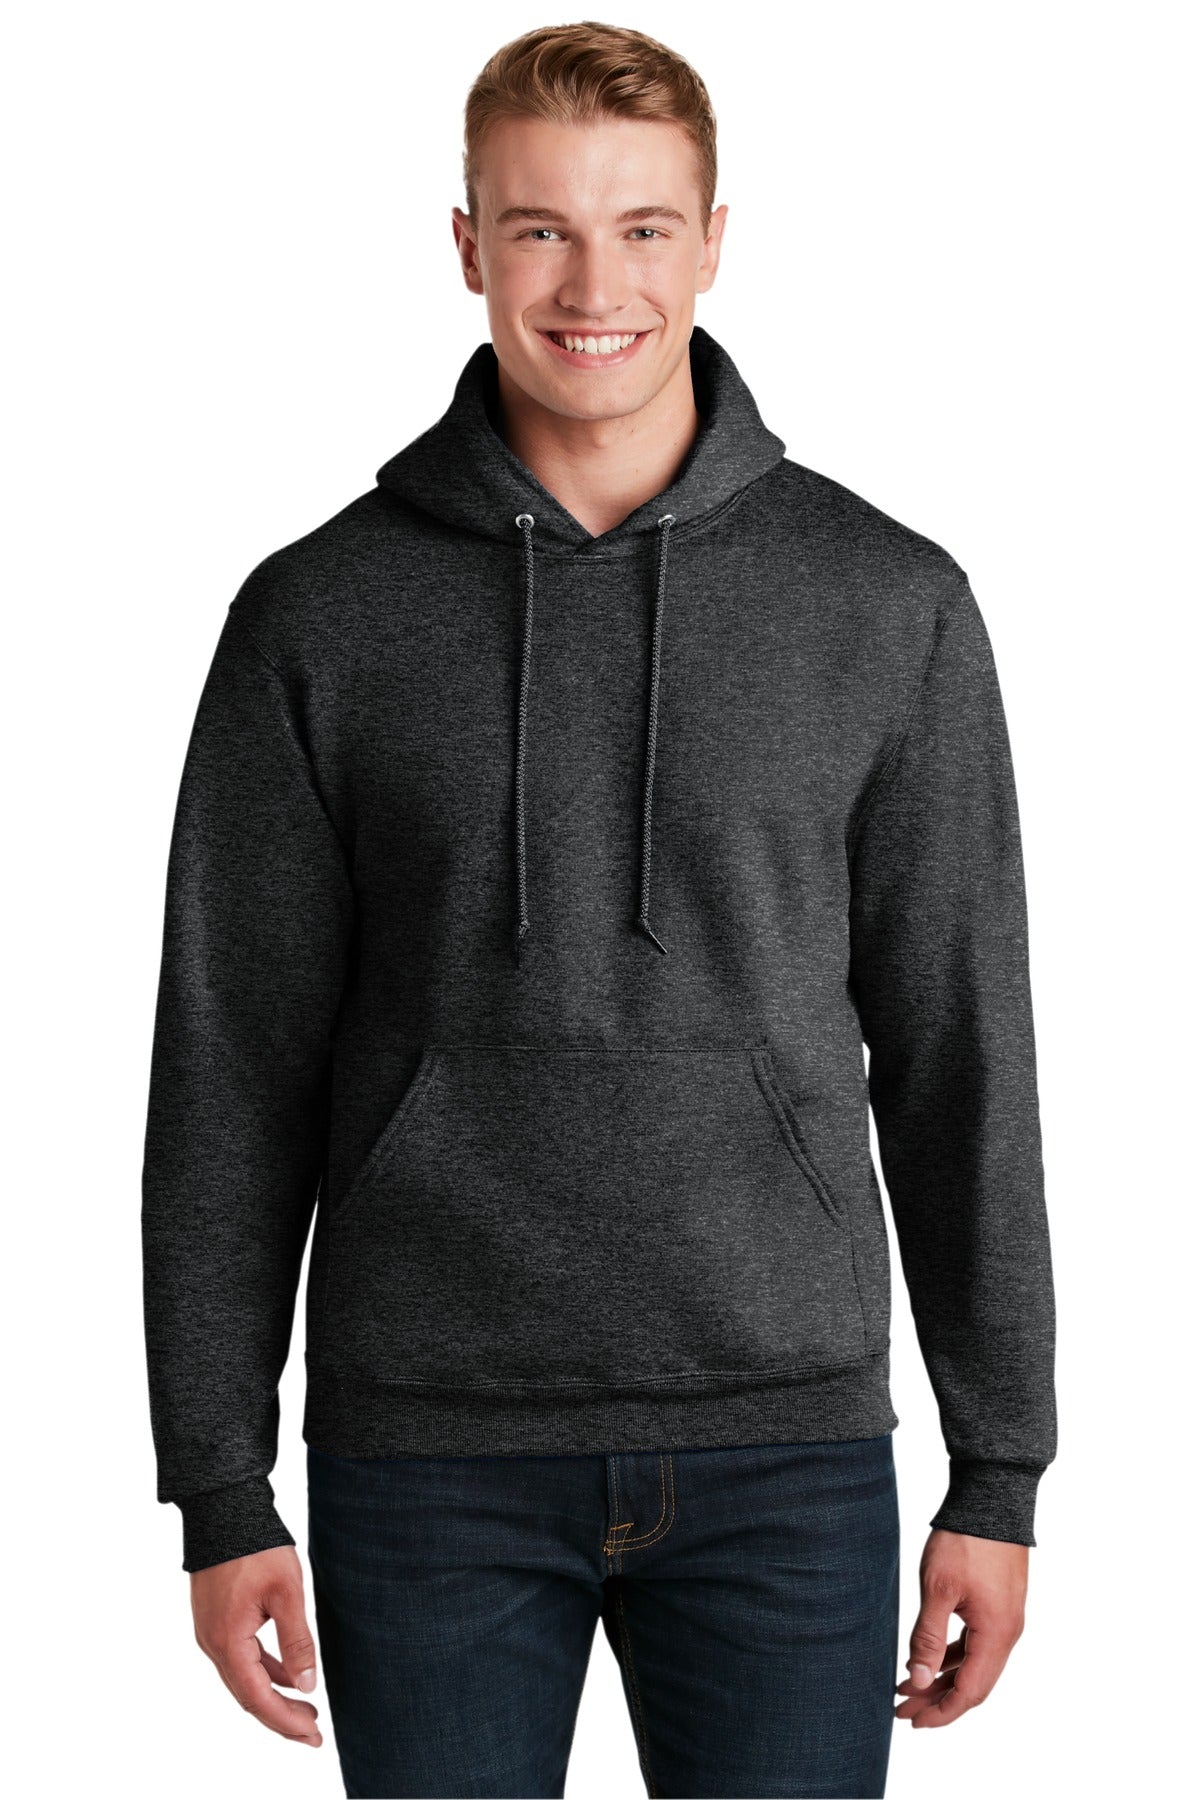 JERZEES® SUPER SWEATS® NuBlend® - Pullover Hooded Sweatshirt. 4997M - DFW Impression